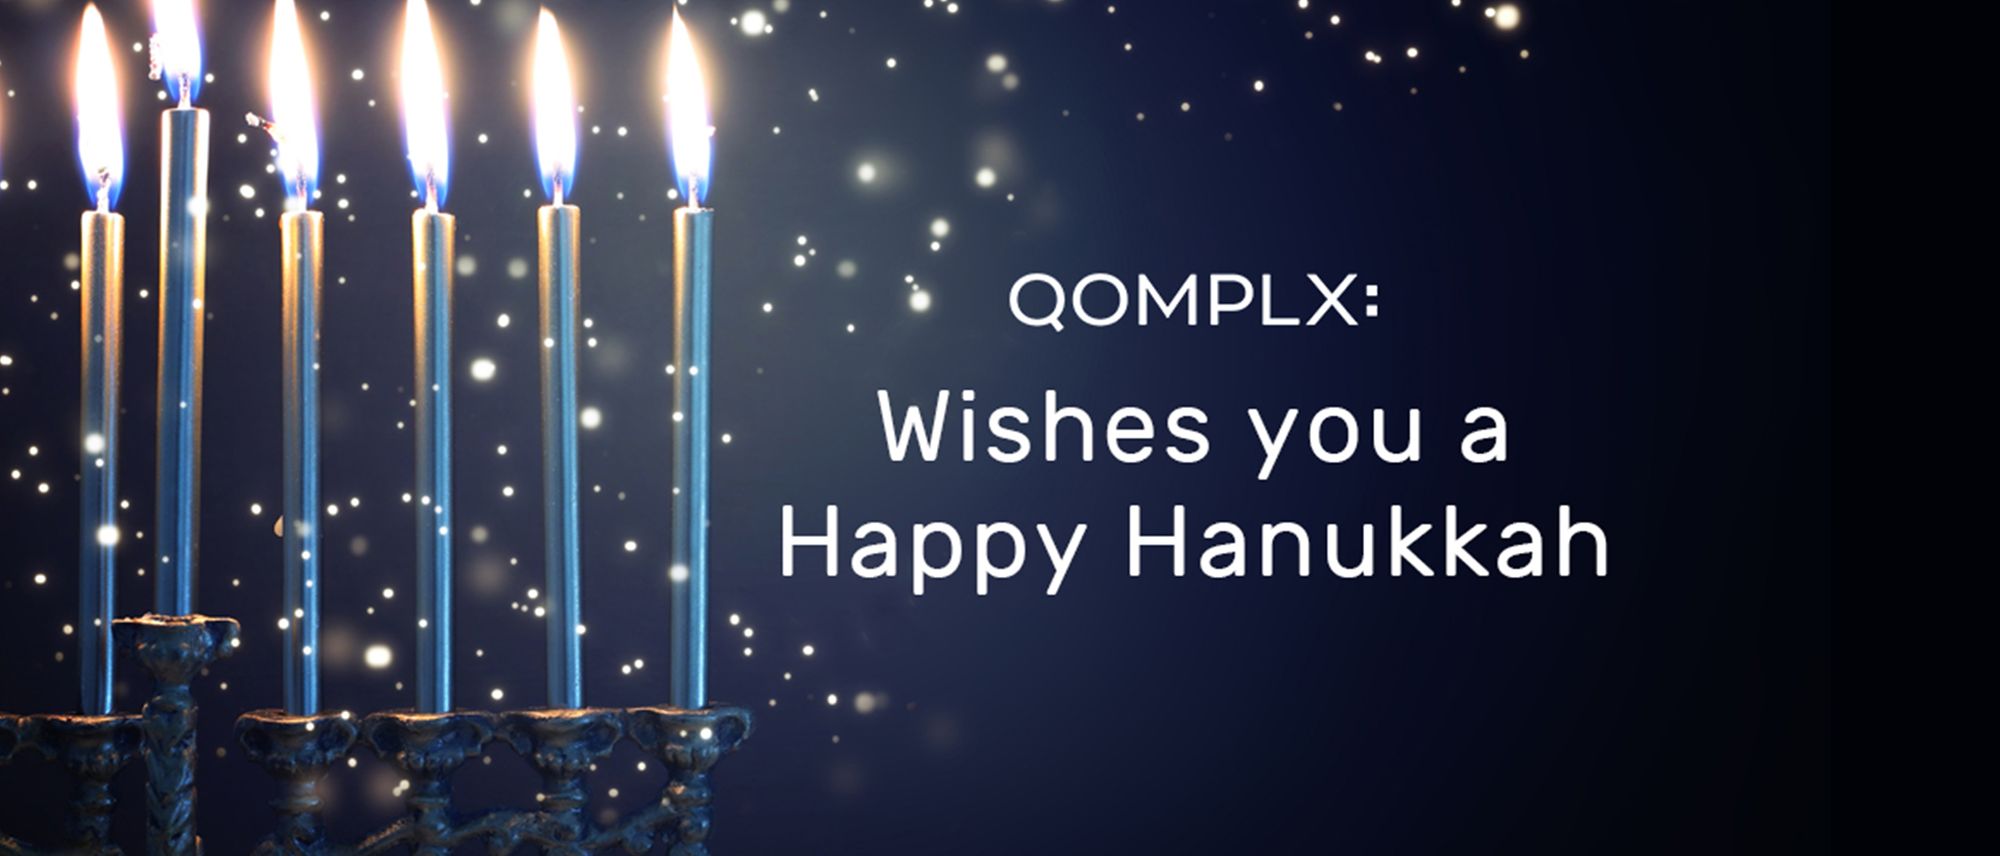 Happy Hanukkah 2020 from QOMPLX!